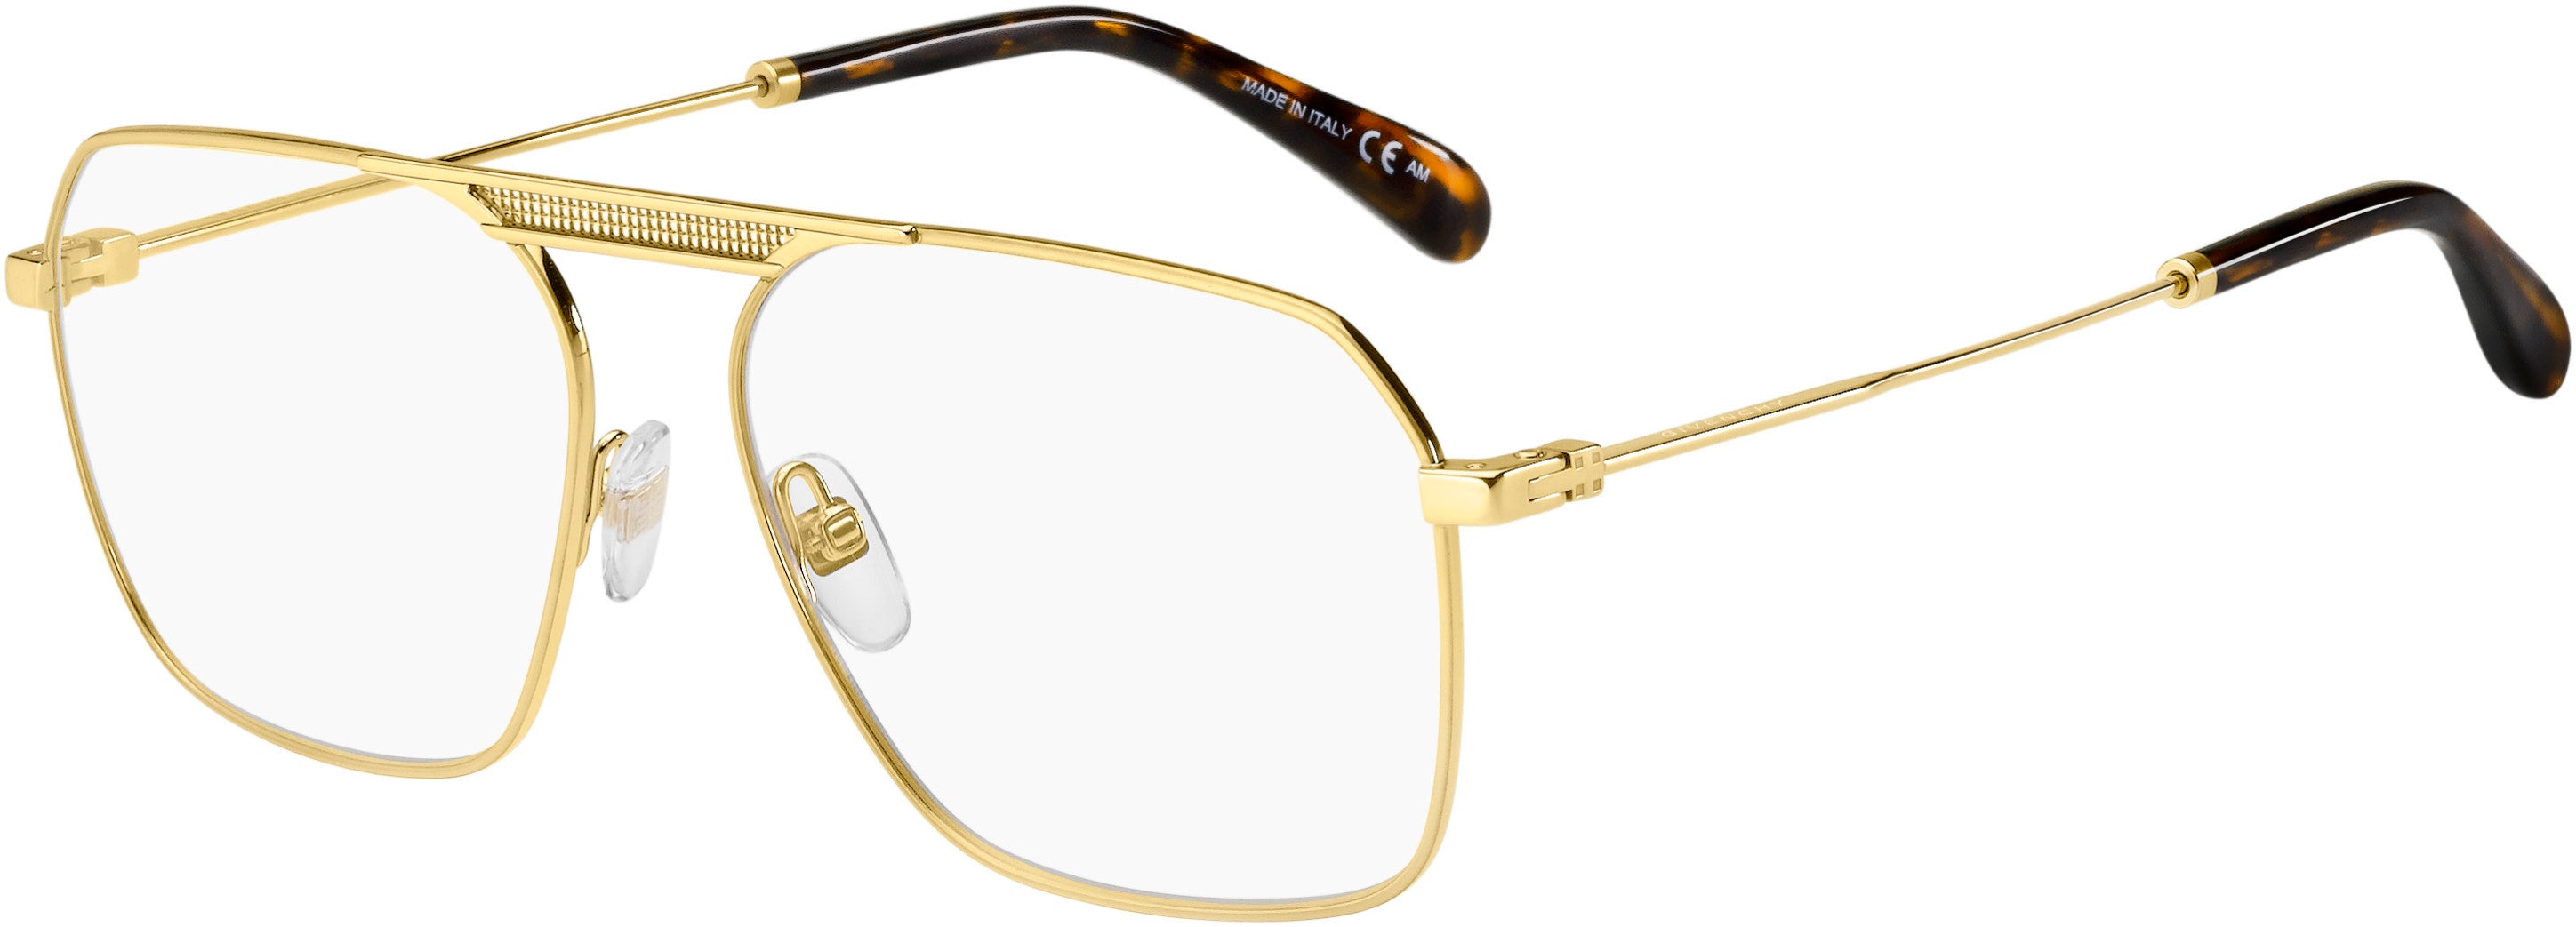  Givenchy 0118 Aviator Eyeglasses 0J5G-0J5G  Gold (00 Demo Lens)